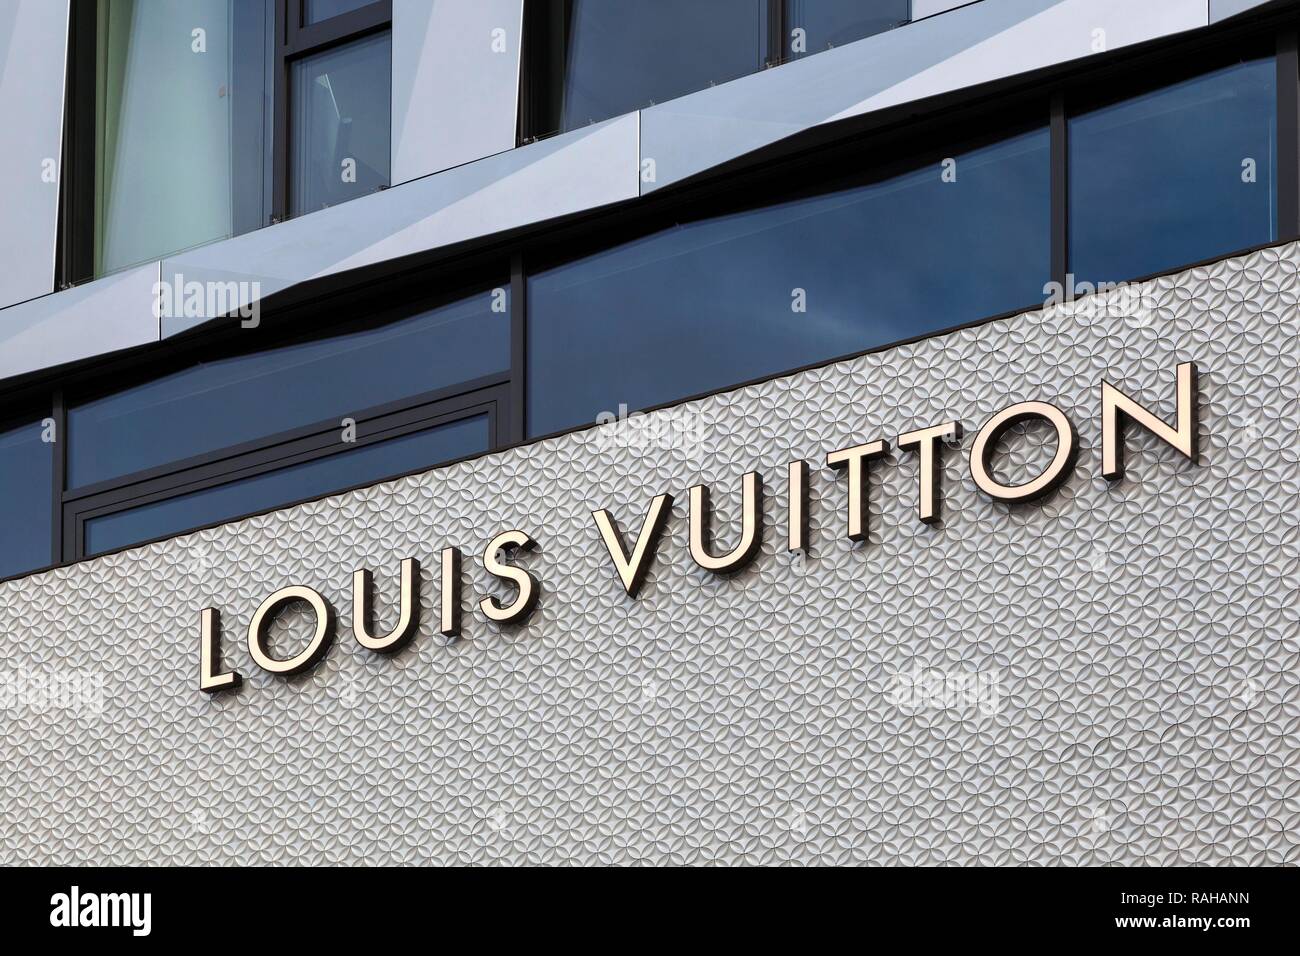 Escrito en la fachada de la casa, tienda de moda Louis Vuitton, Dorotheen Quartier DOQU, arquitecto Behnisch, Stuttgart, Baden-Württemberg Foto de stock